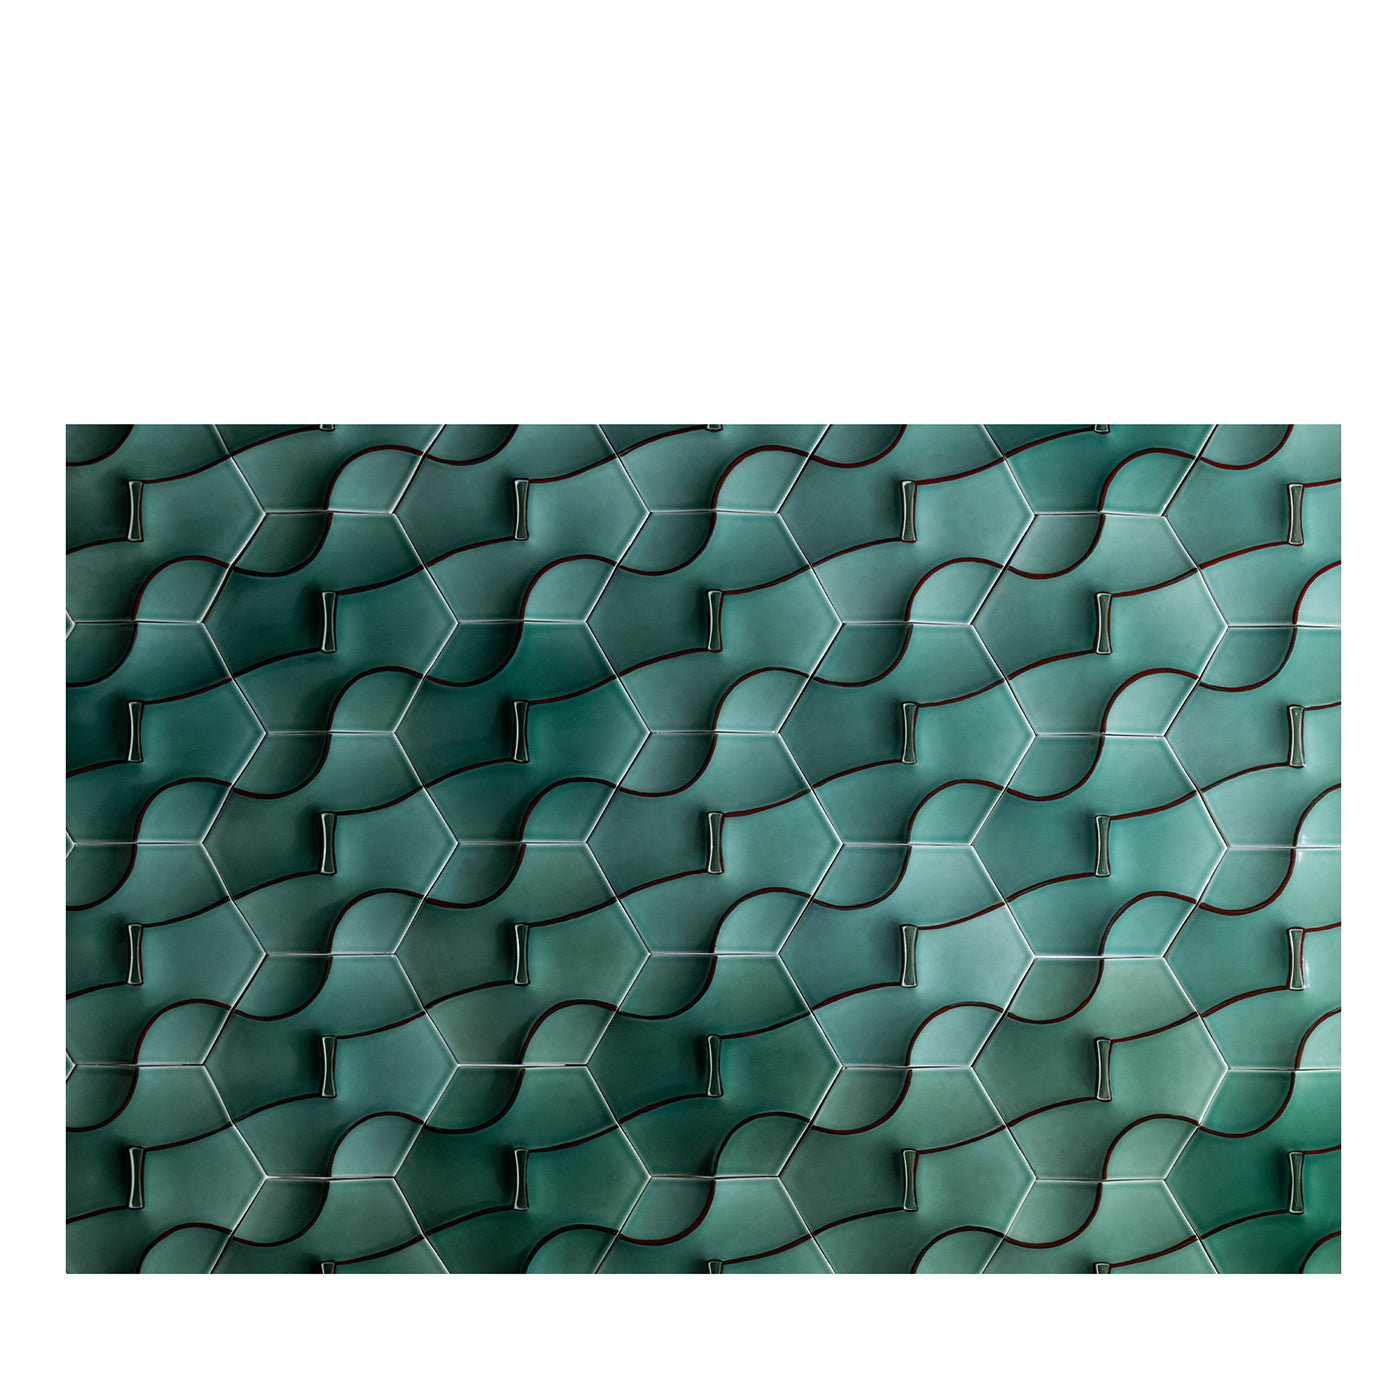 CADENZA Tiles by Kejun Li #2 - Main view